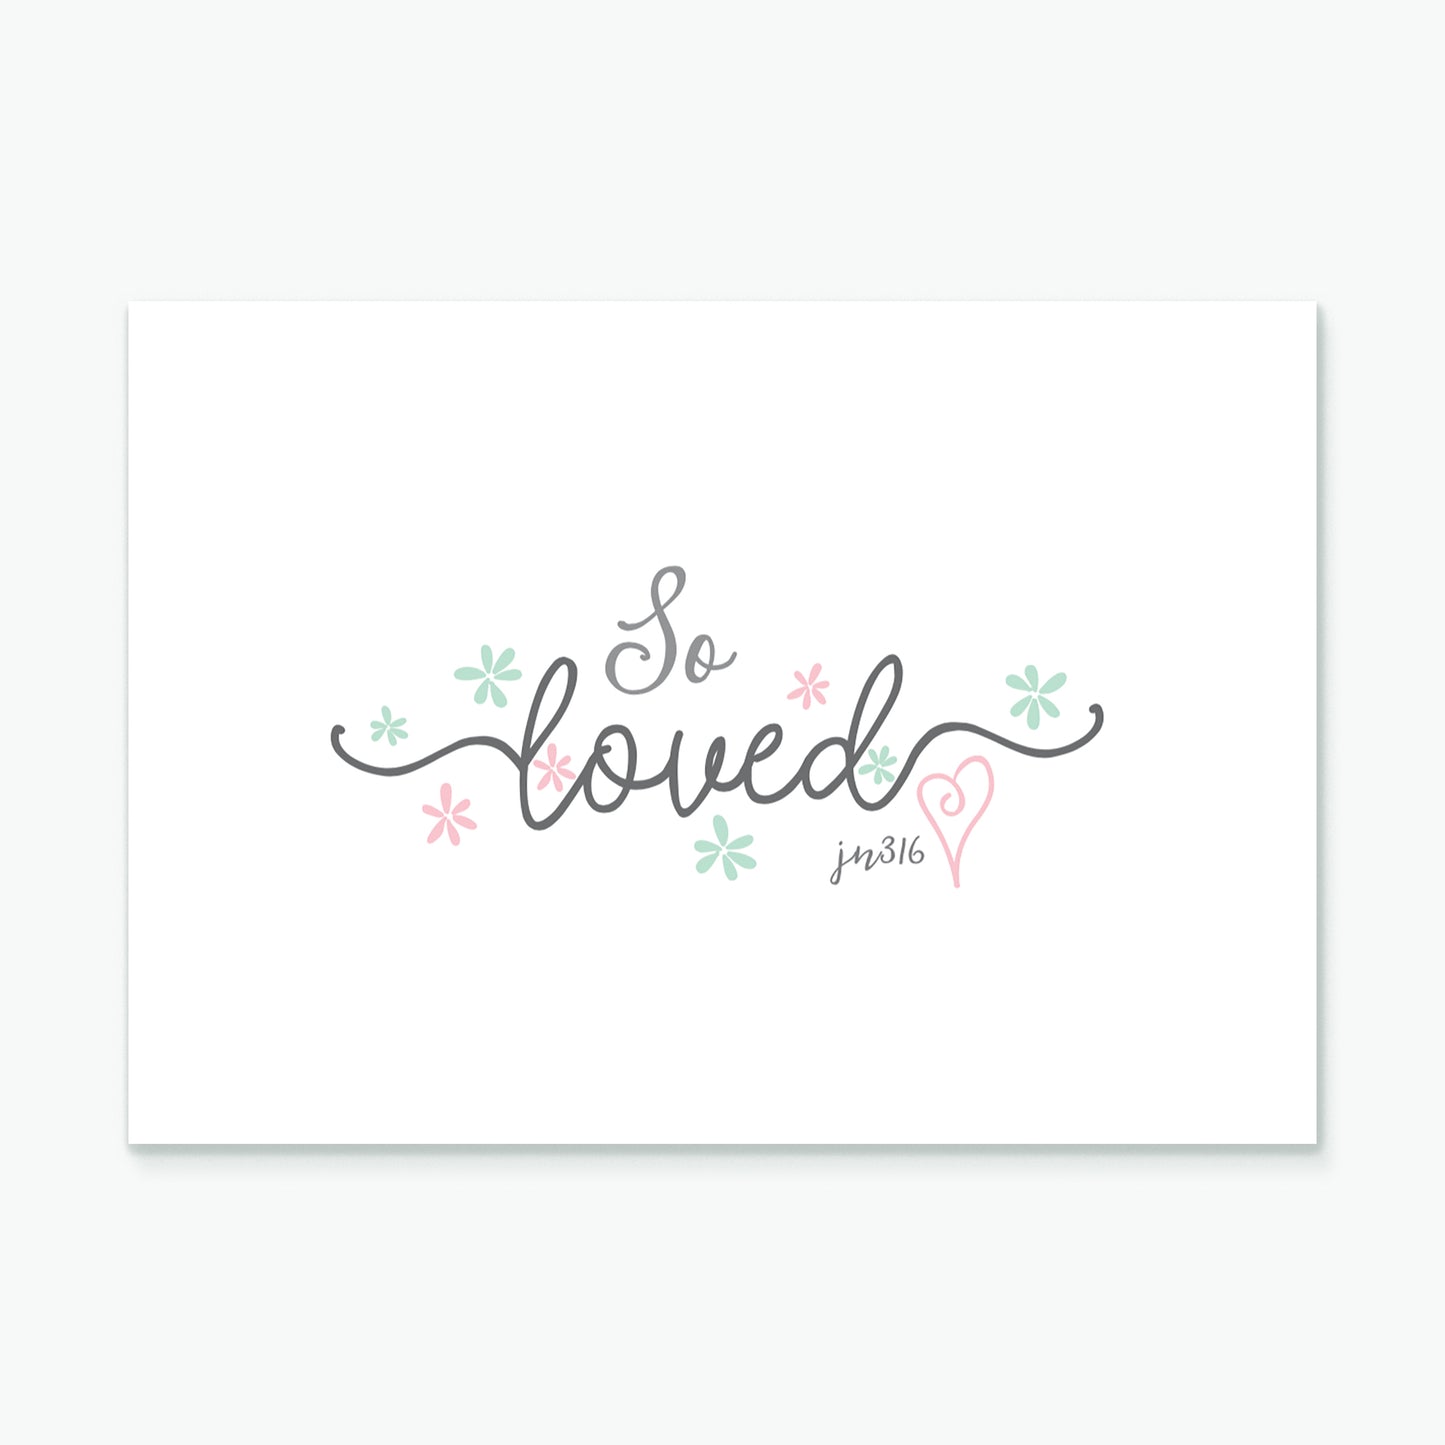 'So Loved' by Preditos - Greeting Card